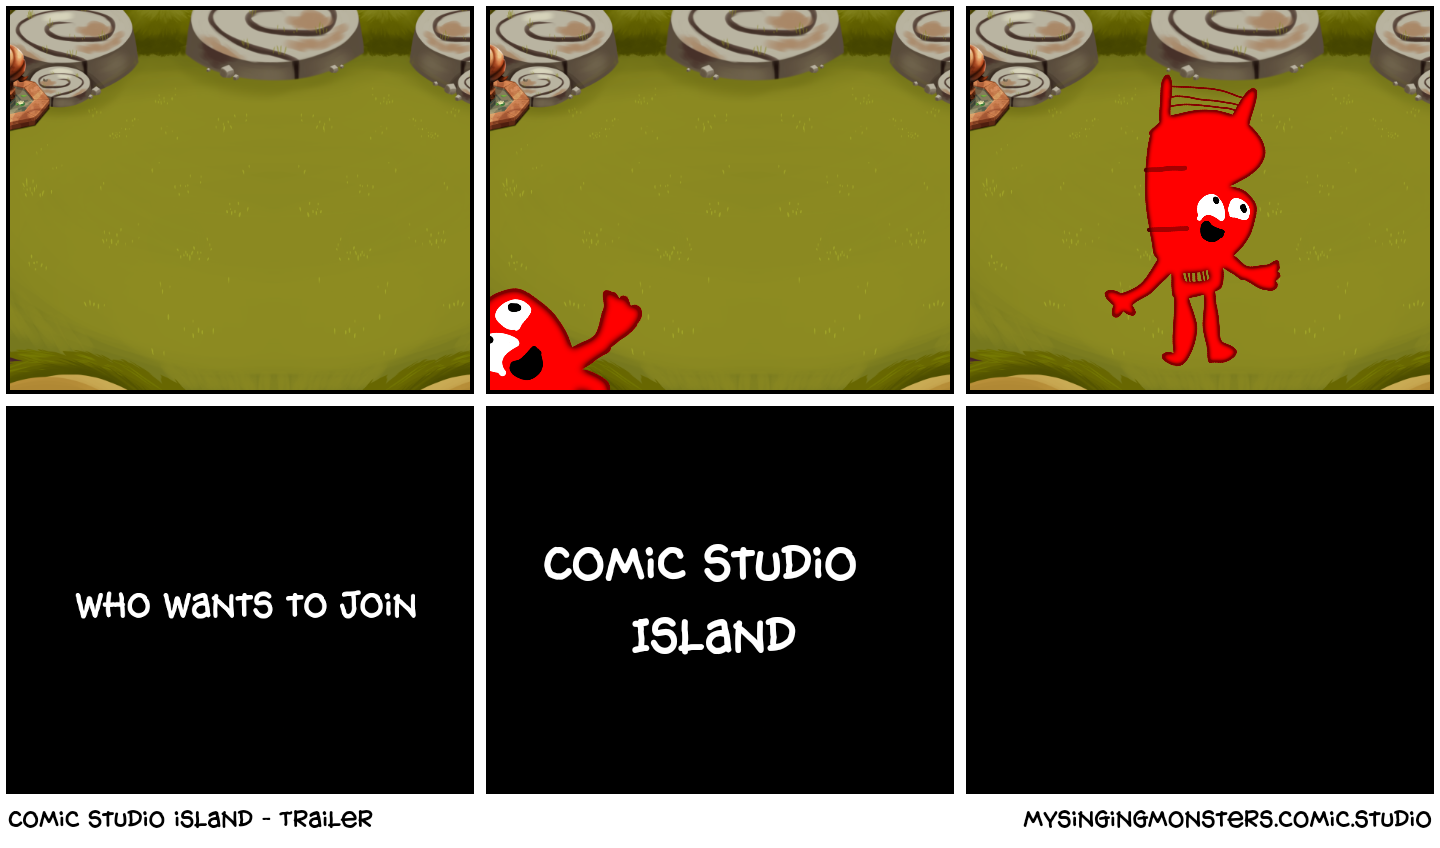 Comic Studio island - Trailer